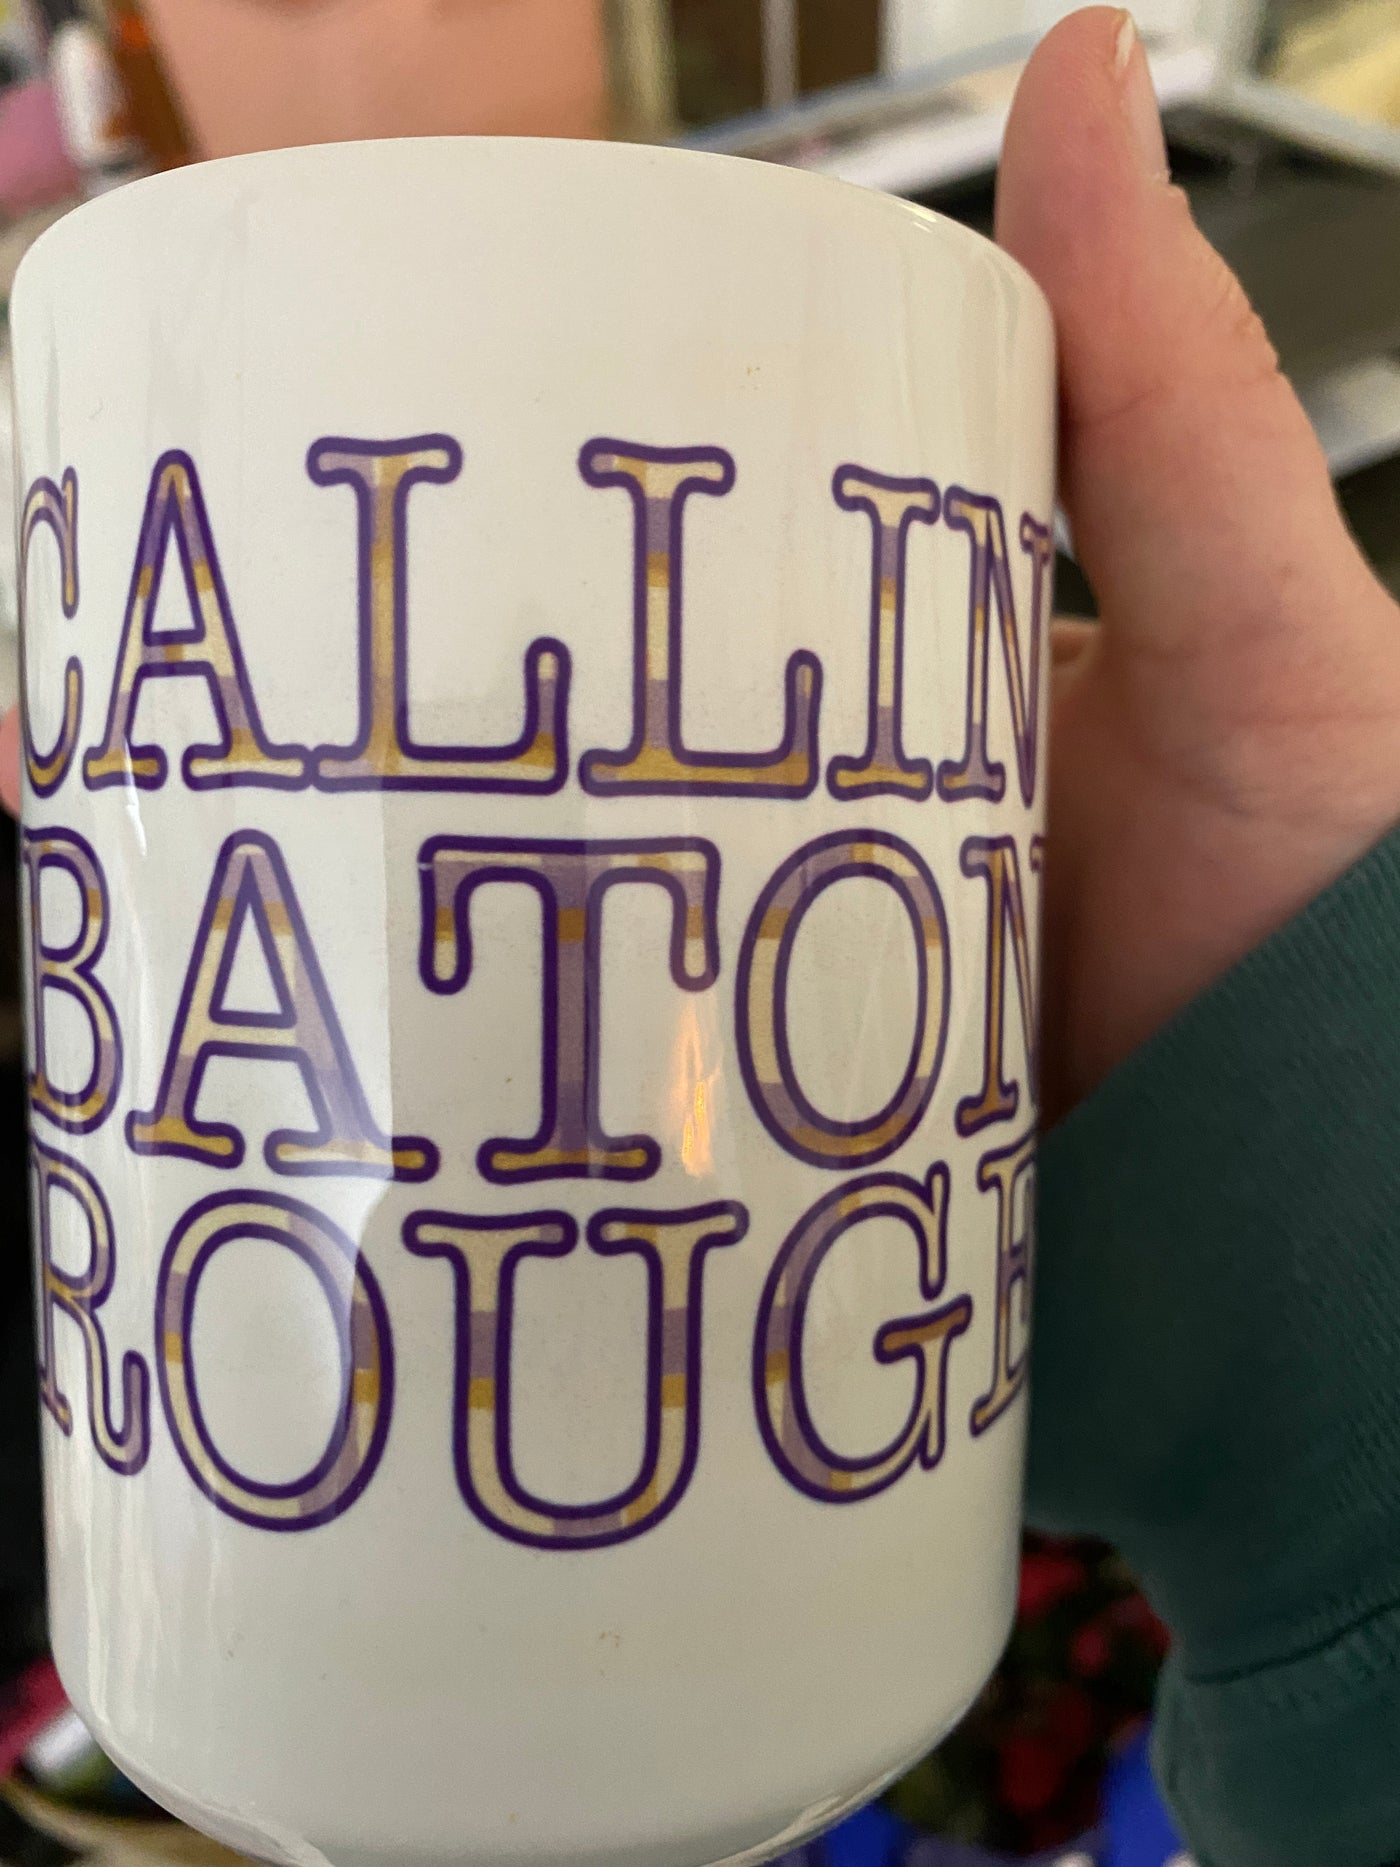 Hand holding a coffee mug. Coffee mug has plaid type that says "Callin Baton Rouge"